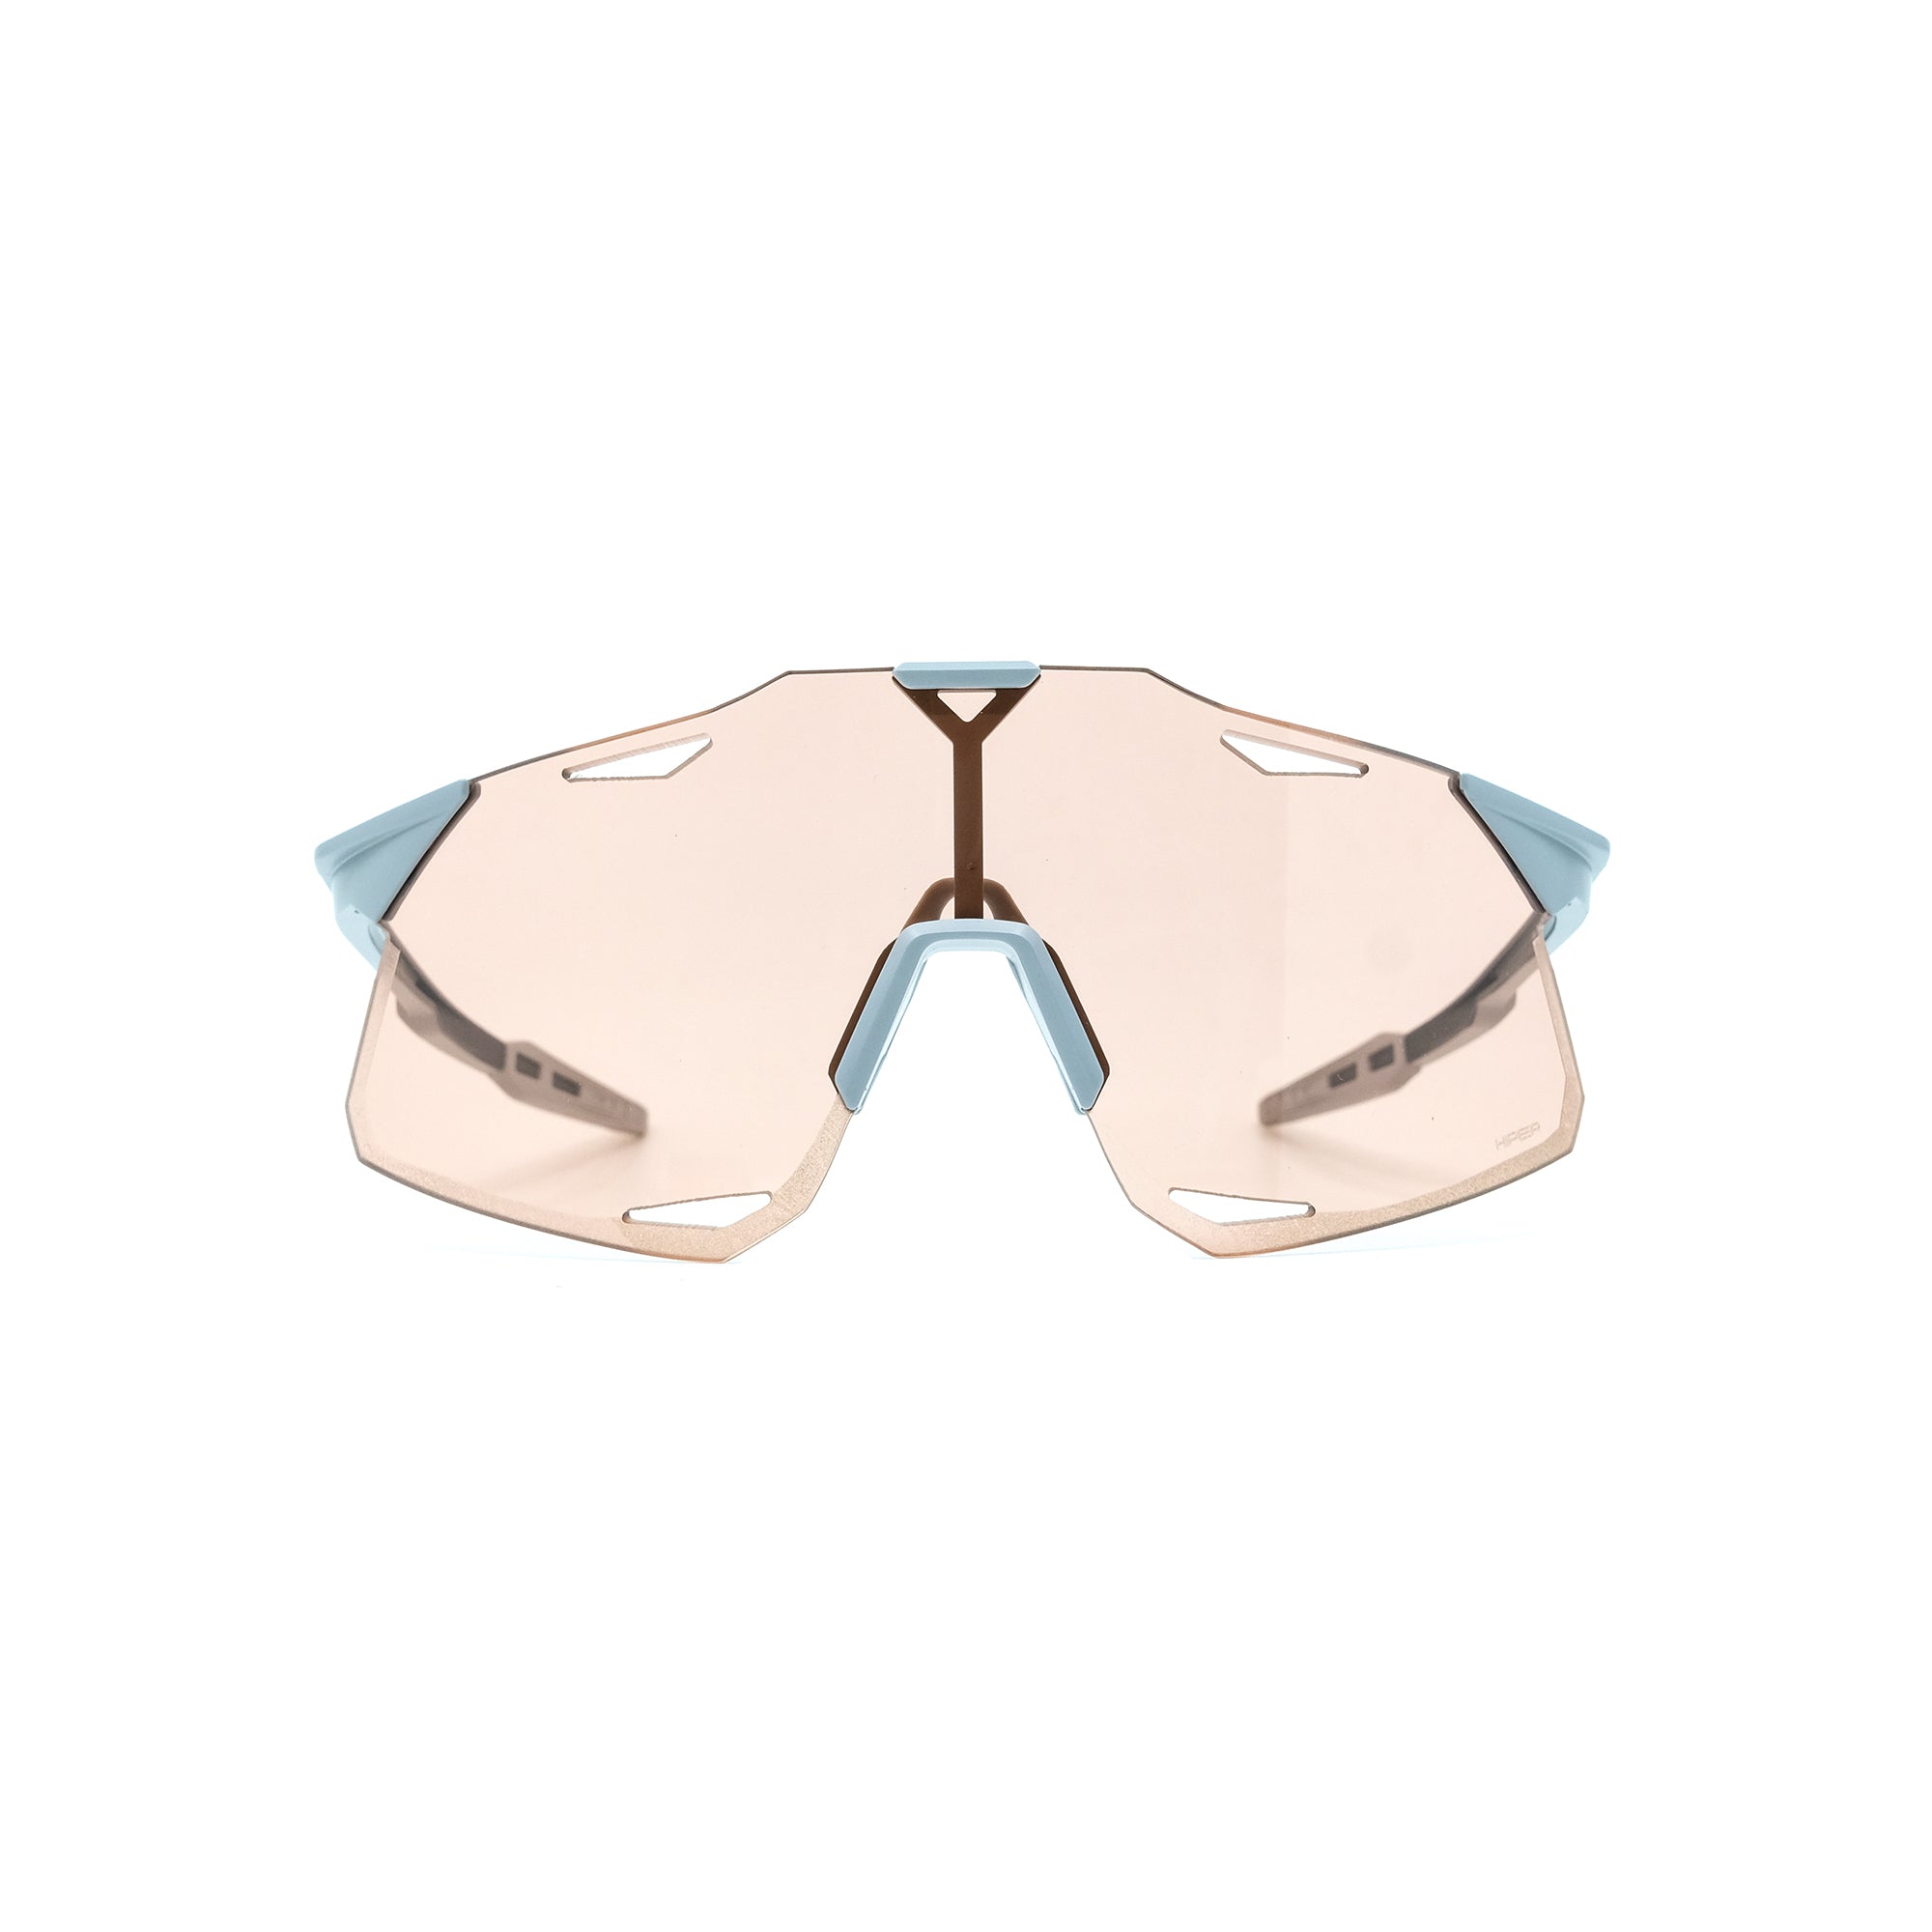 100% Hypercraft Sunglasses - Matte Stone Grey (HiPer Coral Lens)